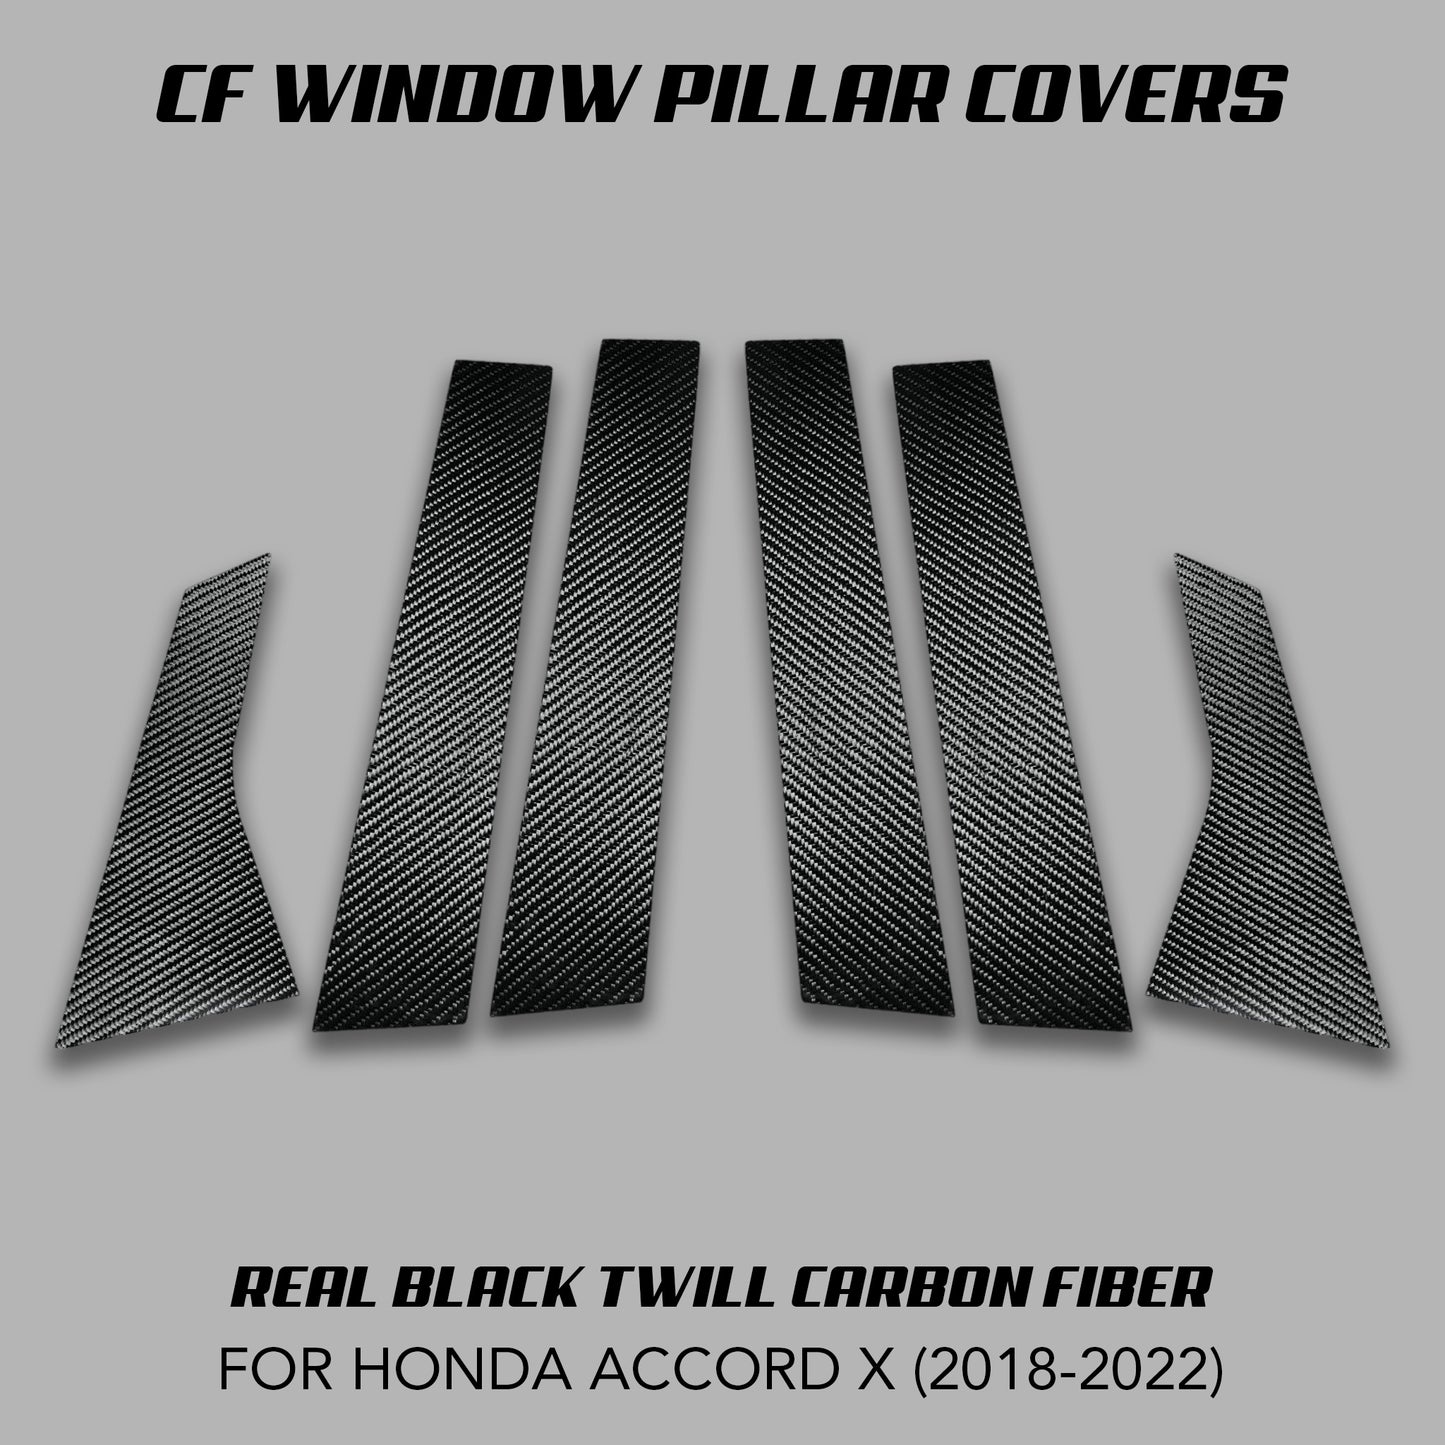 [ACCORD X] REAL CARBON FIBER WINDOW PILLAR COVERS (SHIPS 5/30)